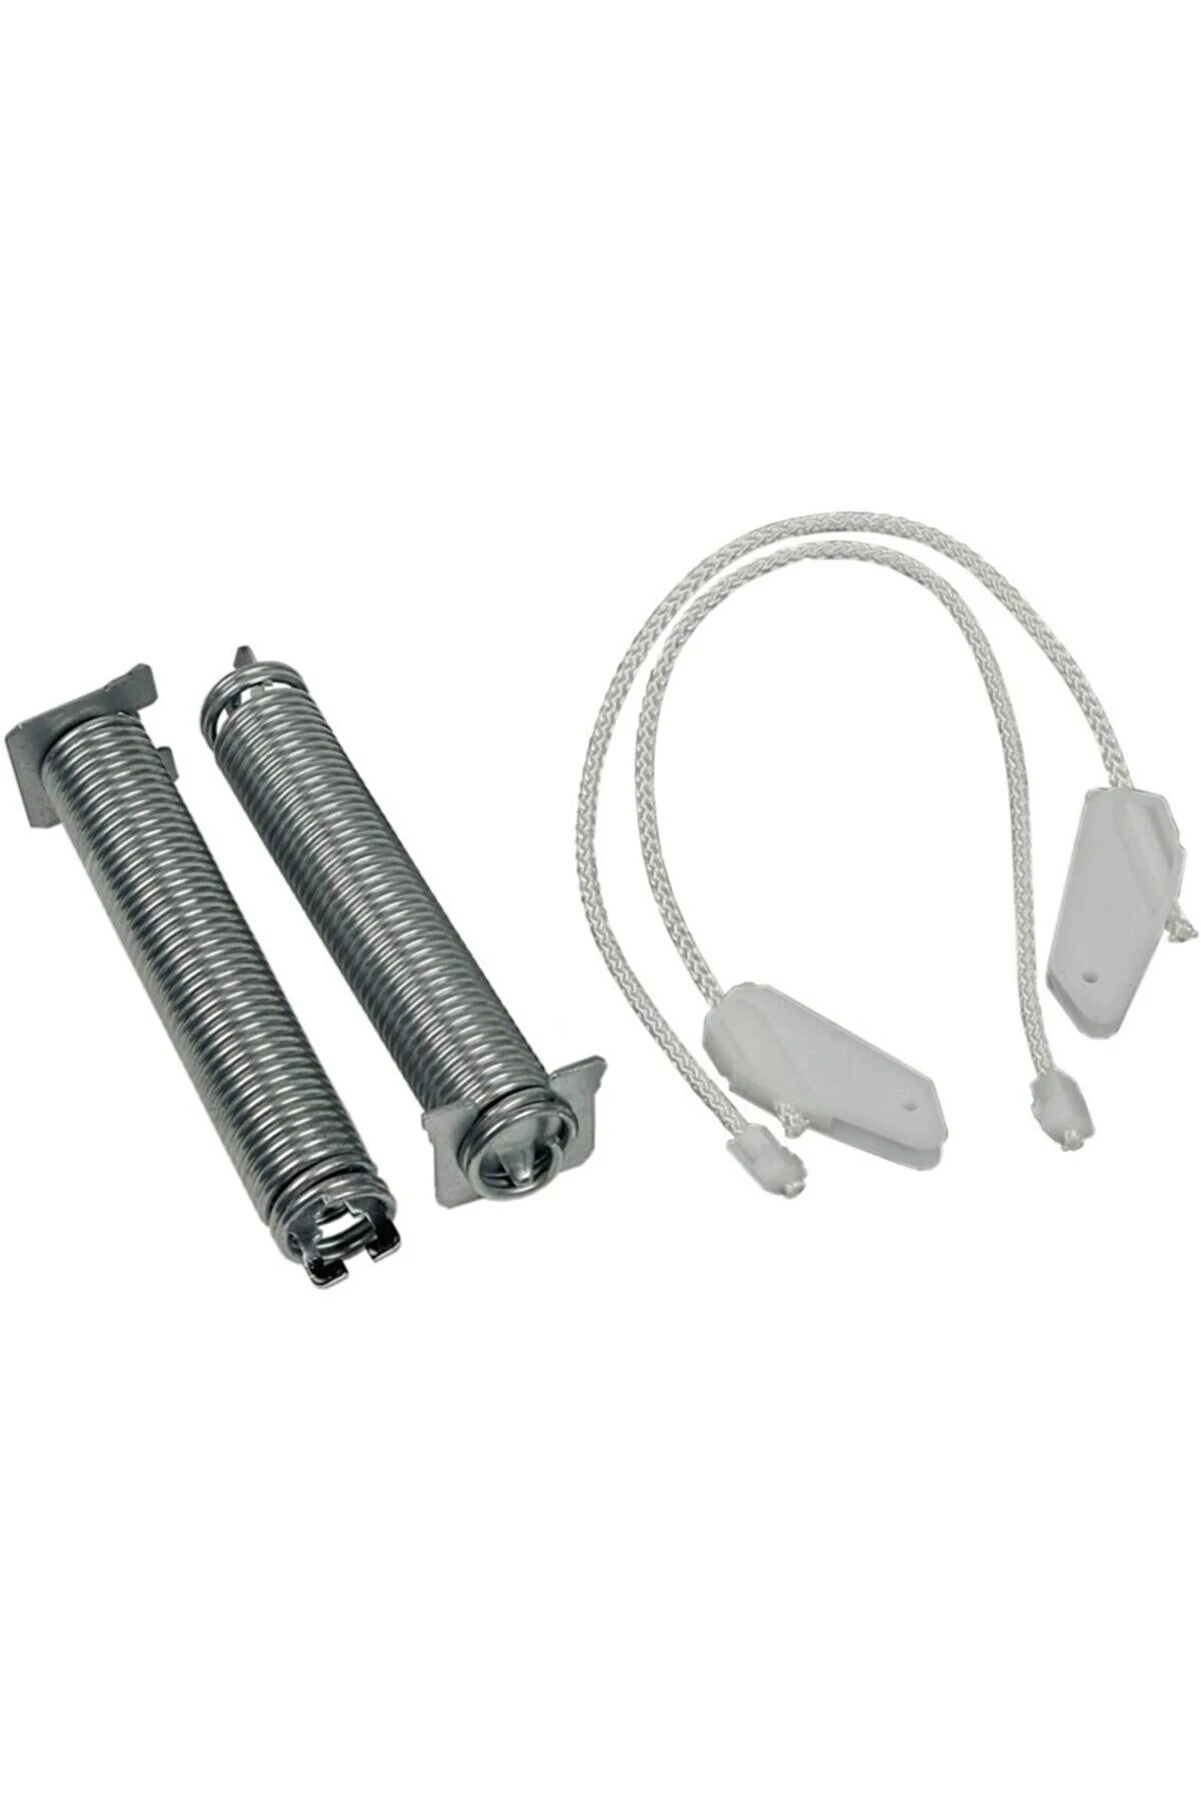 Door Hinge Cable Rope Spring Repair Kit for Bosch Dishwashers